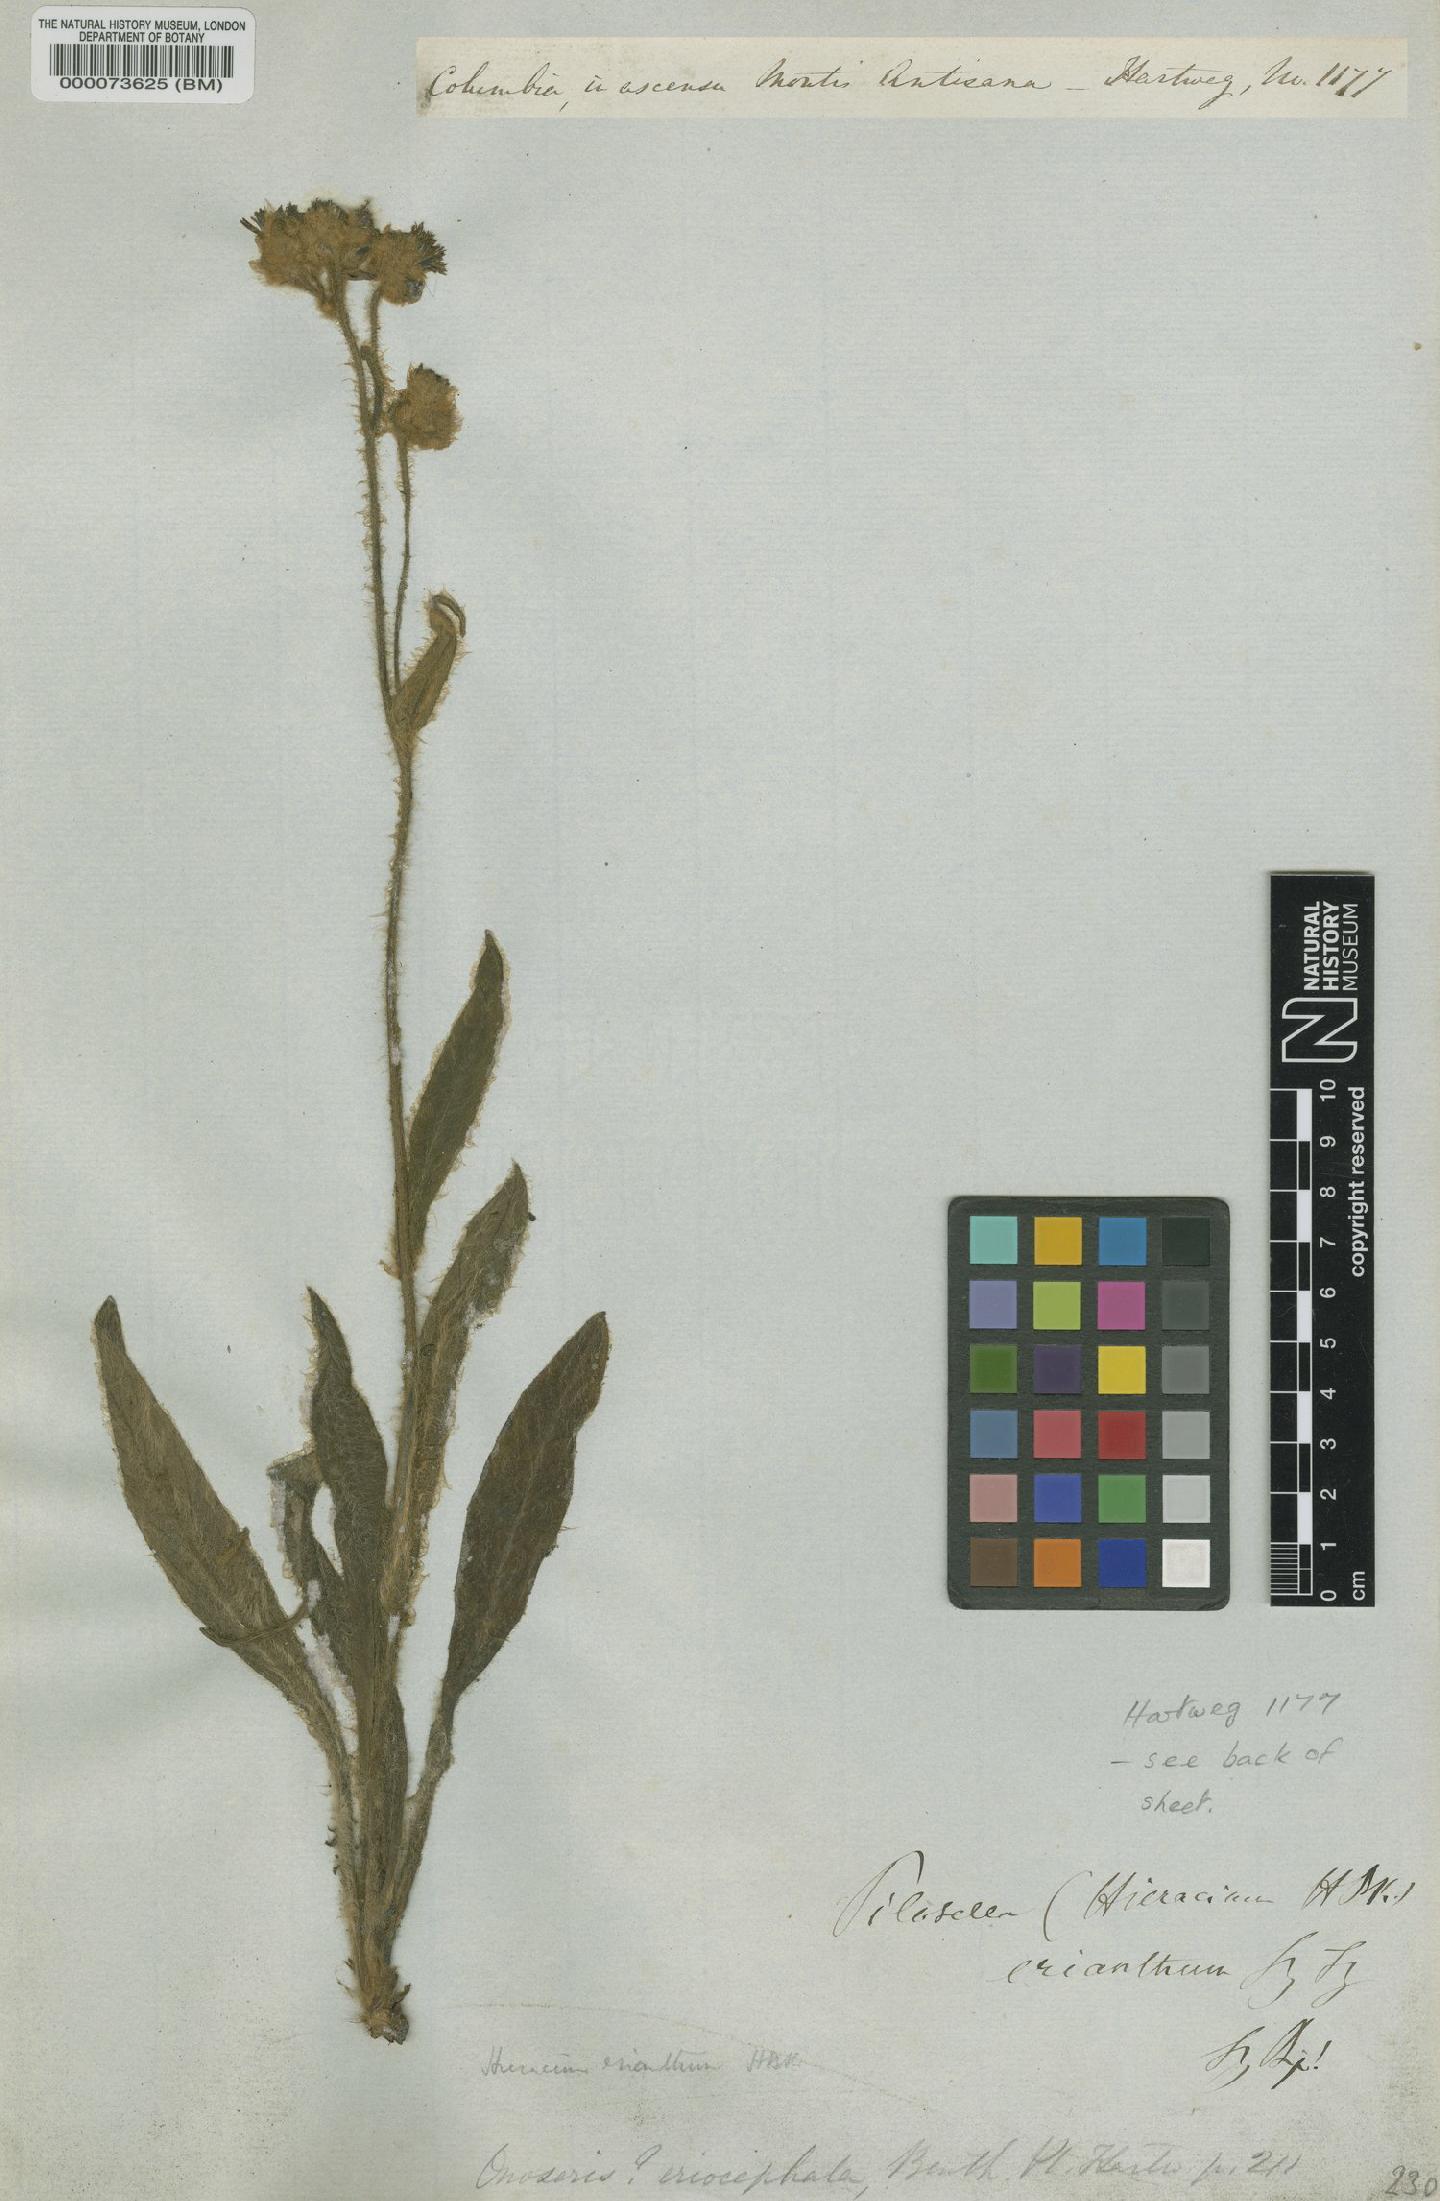 To NHMUK collection (Hieracium erianthum Klatt; Type; NHMUK:ecatalogue:5605966)